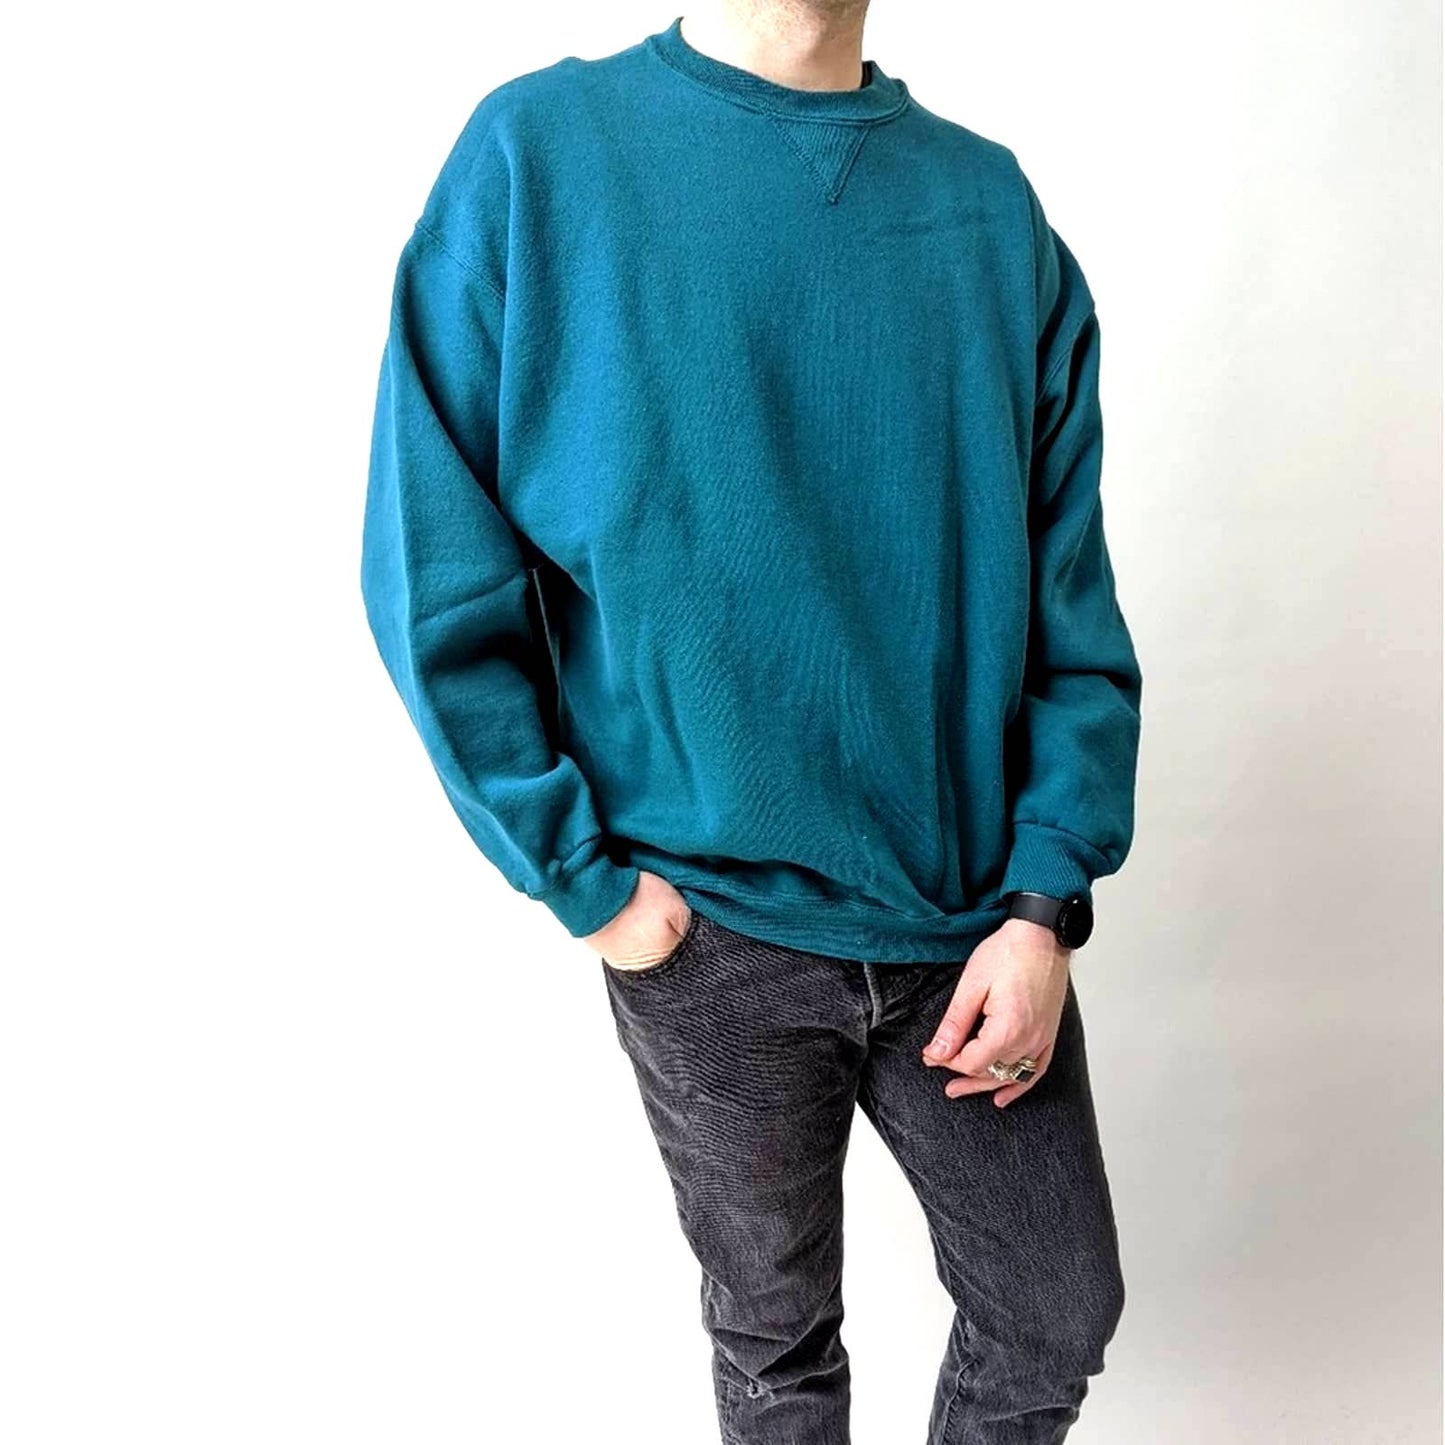 Vintage 90s Hanes HEAVYWEIGHT Sweatshirt │XXL